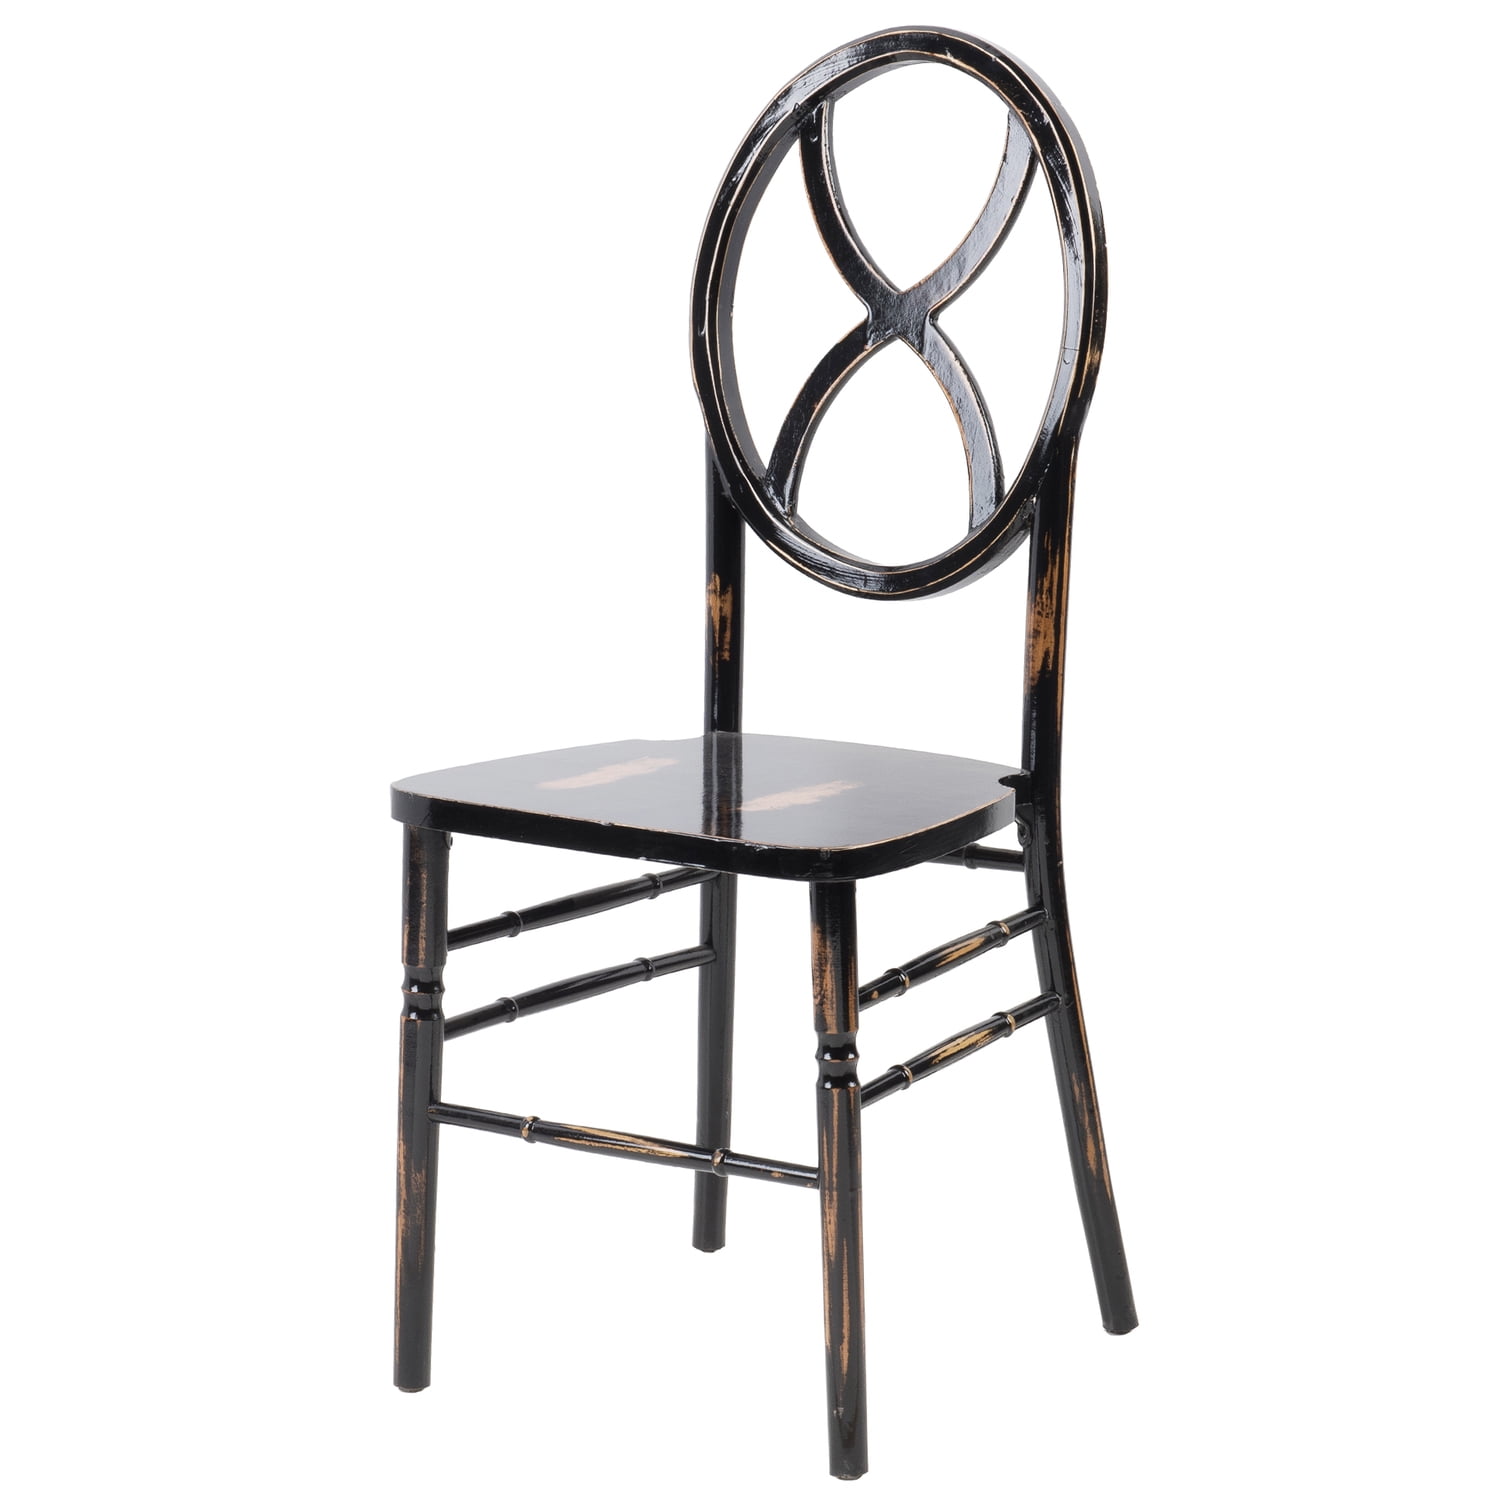 W-415-vr-sandglass-lwb-web2 Veronique Series Stackable Sandglass Lime Black Wood Chair, Set Of 2 - 38.75 X 16 X 16 In.